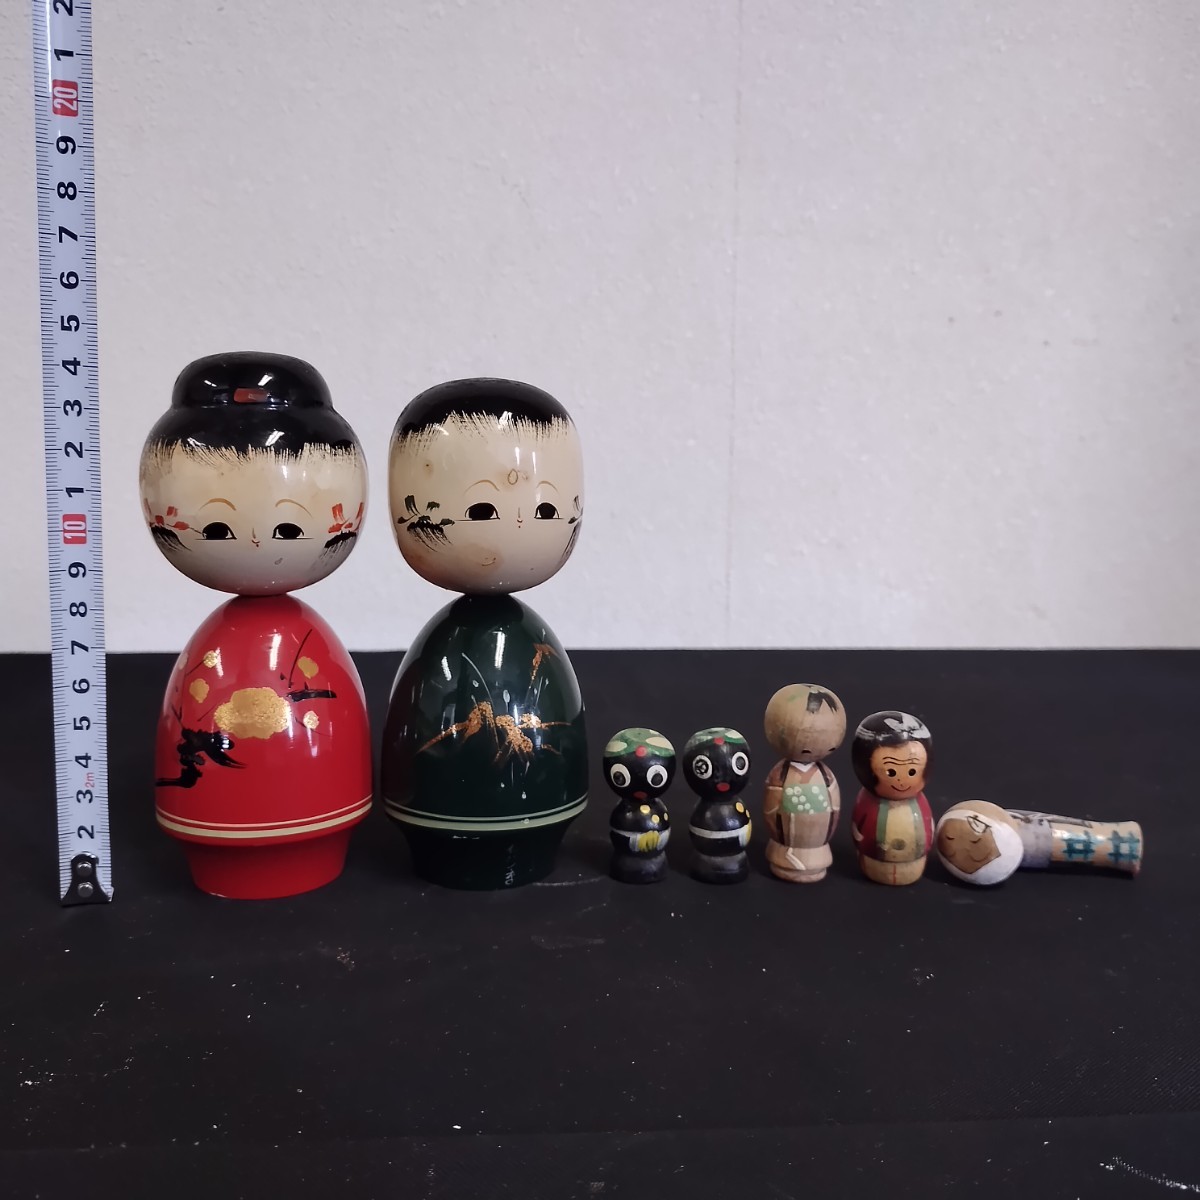 NR730 こけし 伝統こけし 郷土玩具 民芸品 伝統工芸 創作こけし 日本人形 まとめ 人形 レトロ インテリア コレクション_画像8